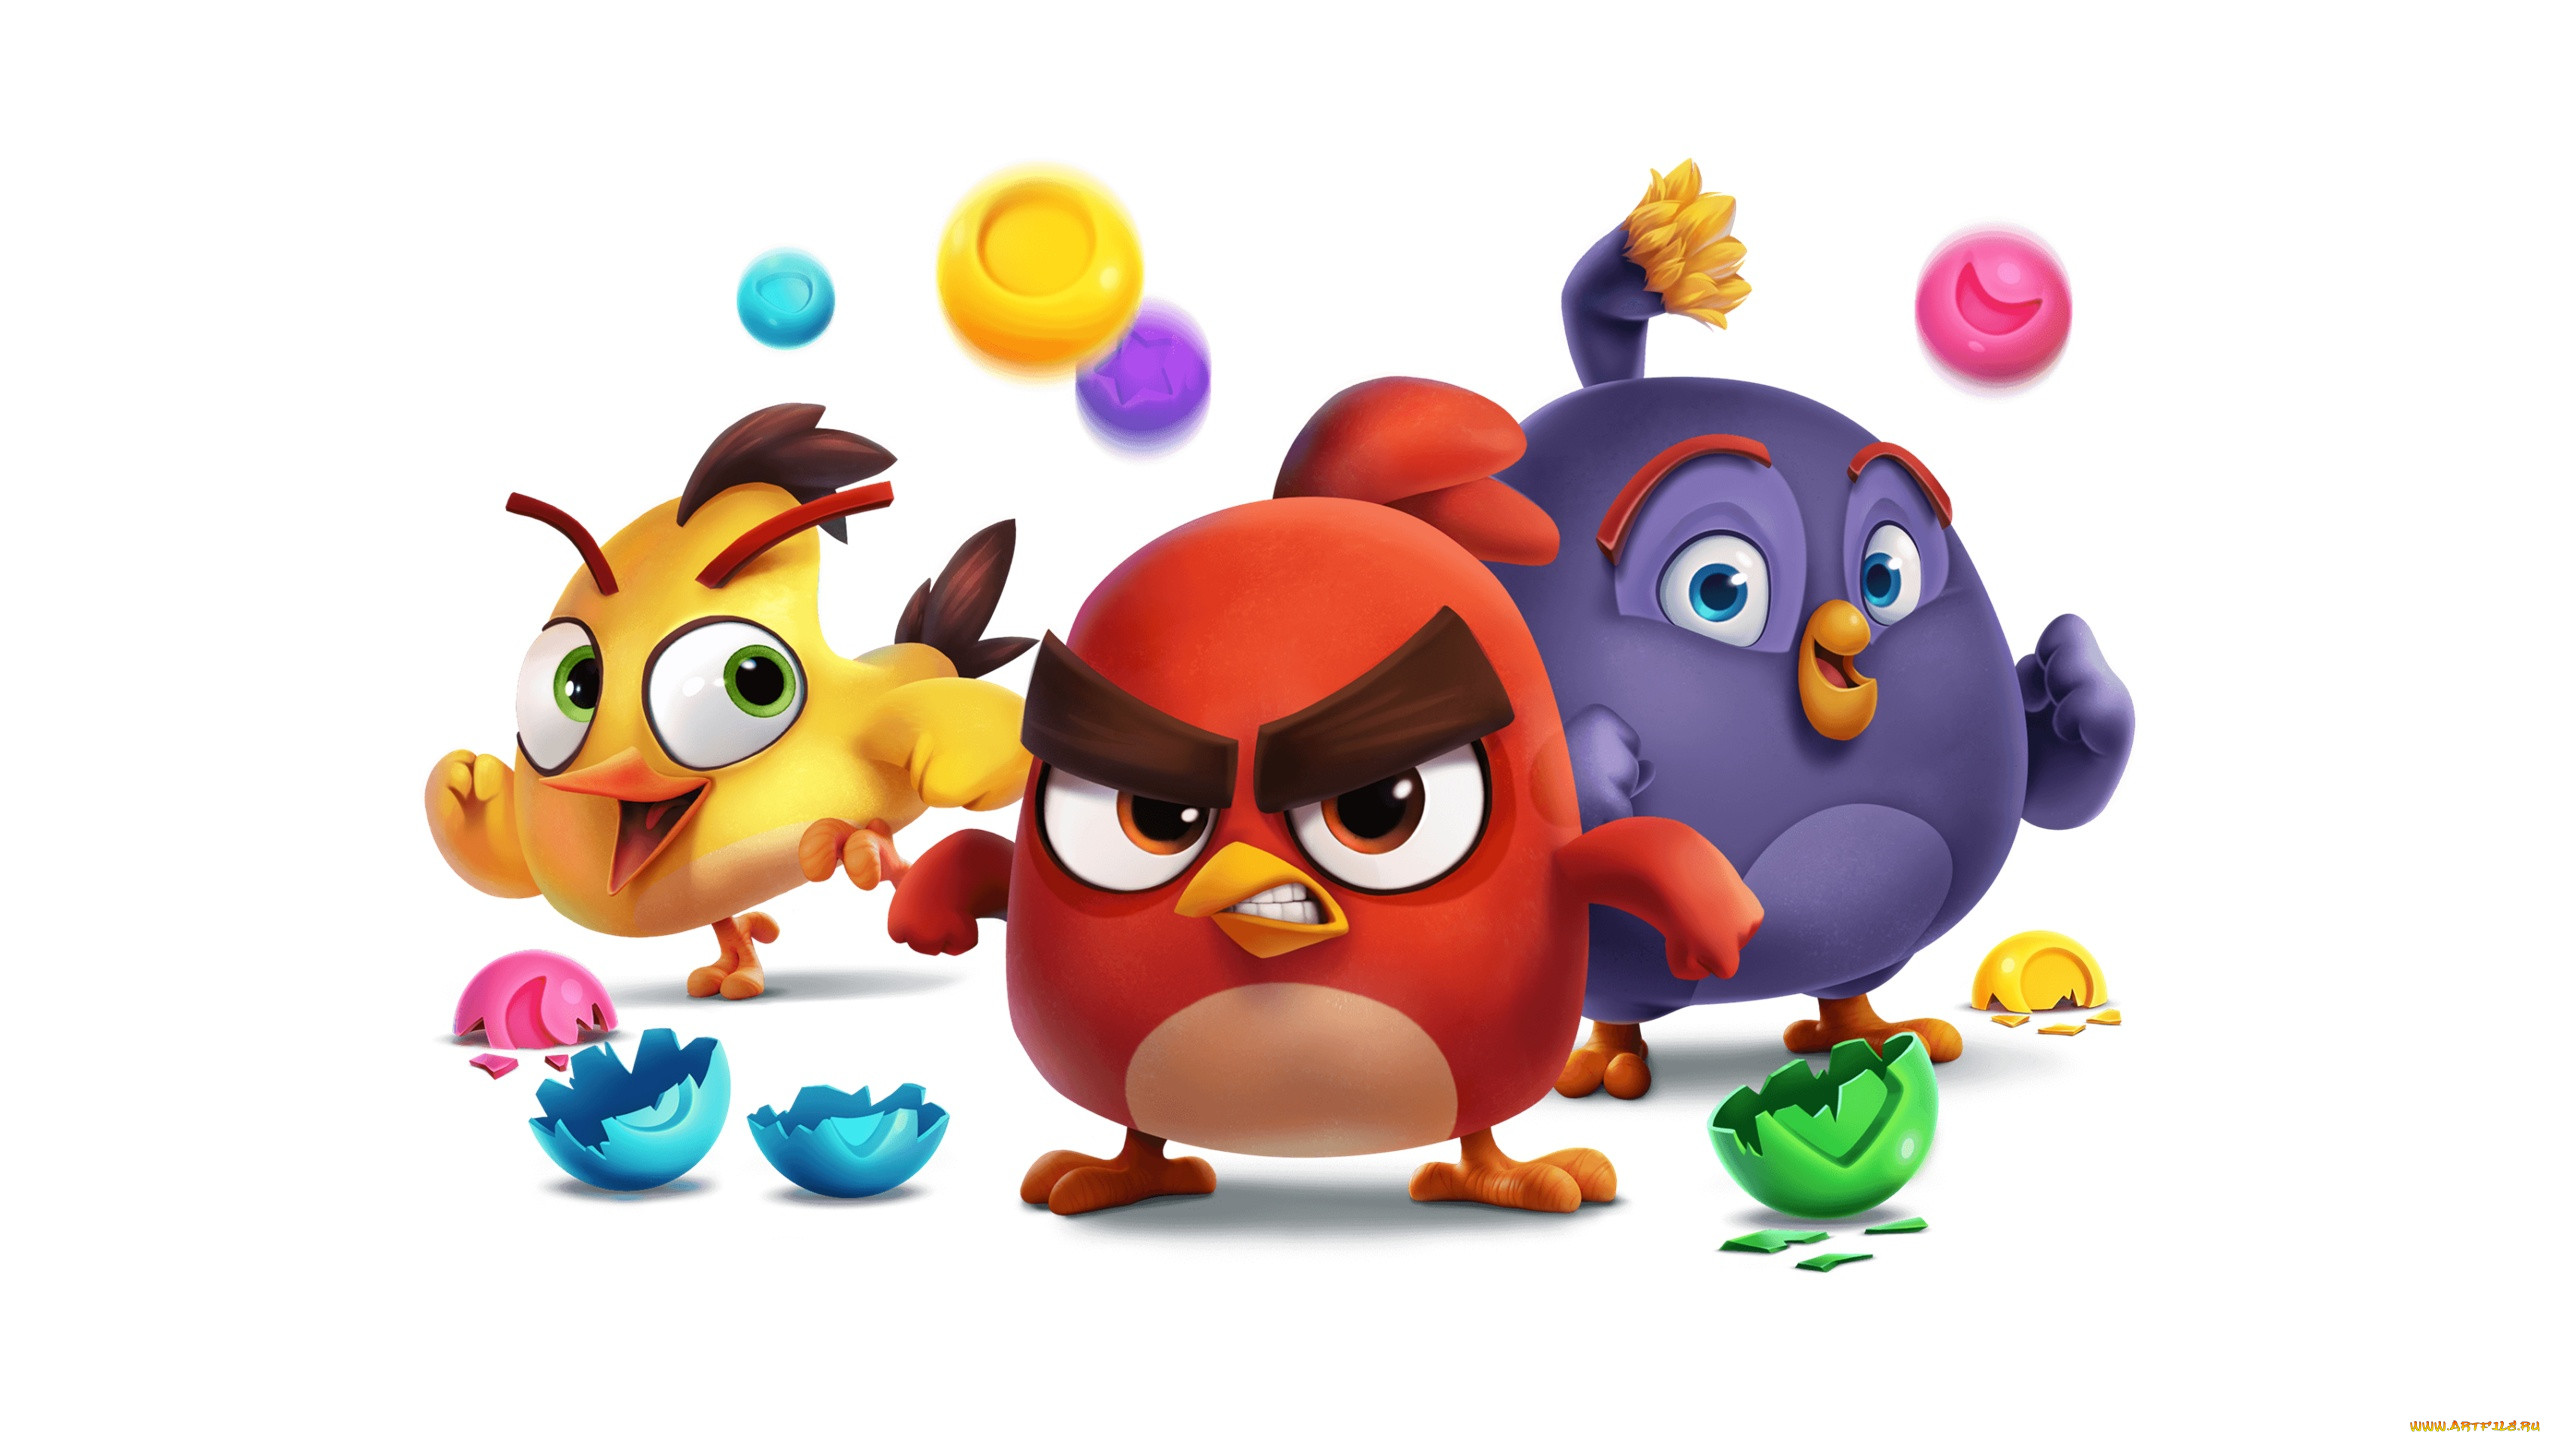 Обои Angry Birds Dream Blast Видео Игры Angry Birds: Dream Blast, обои для рабочего  стола, фотографии angry birds dream blast, видео игры, ---другое, птицы,  фон, обои, игра, белый, картинка, angry, birds, на,